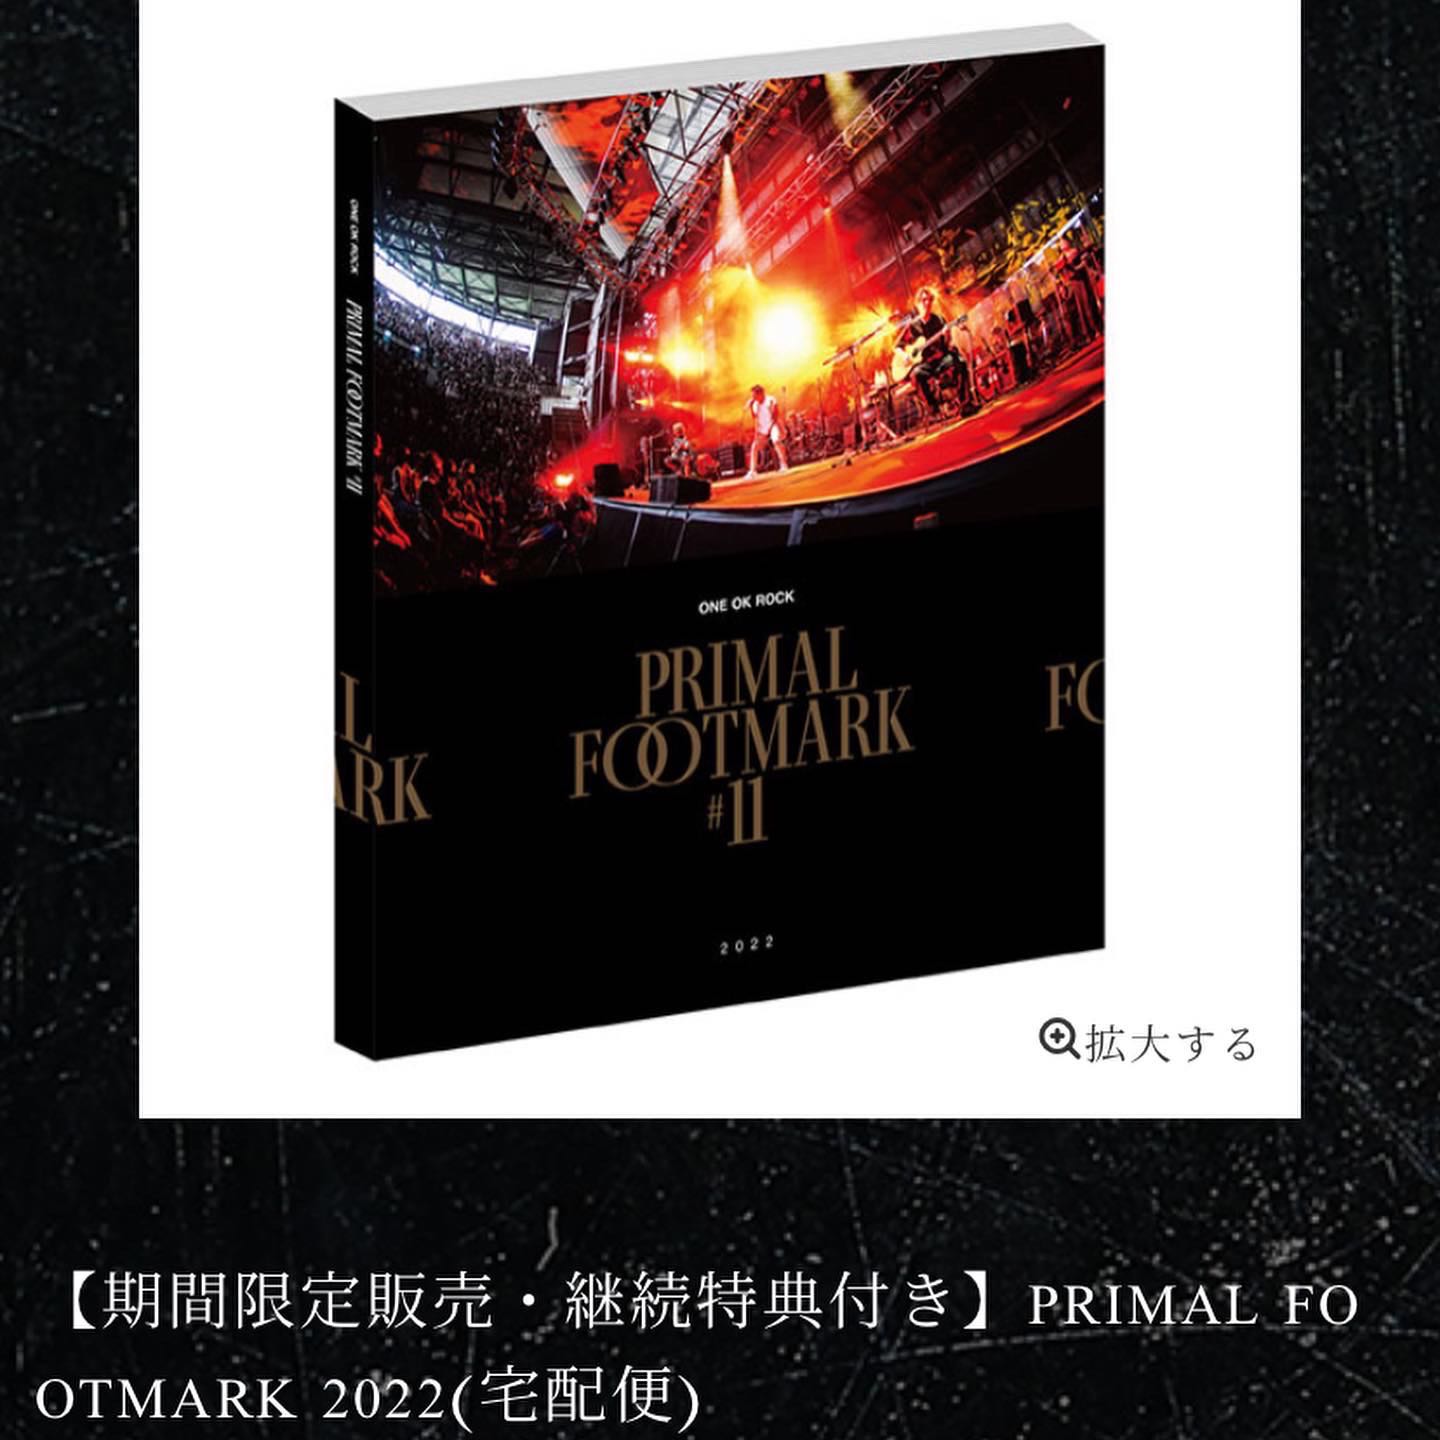 ONE OK ROCK PRIMAL FOOTMARK #9 ワンオク 【爆売り！】 - ミュージシャン